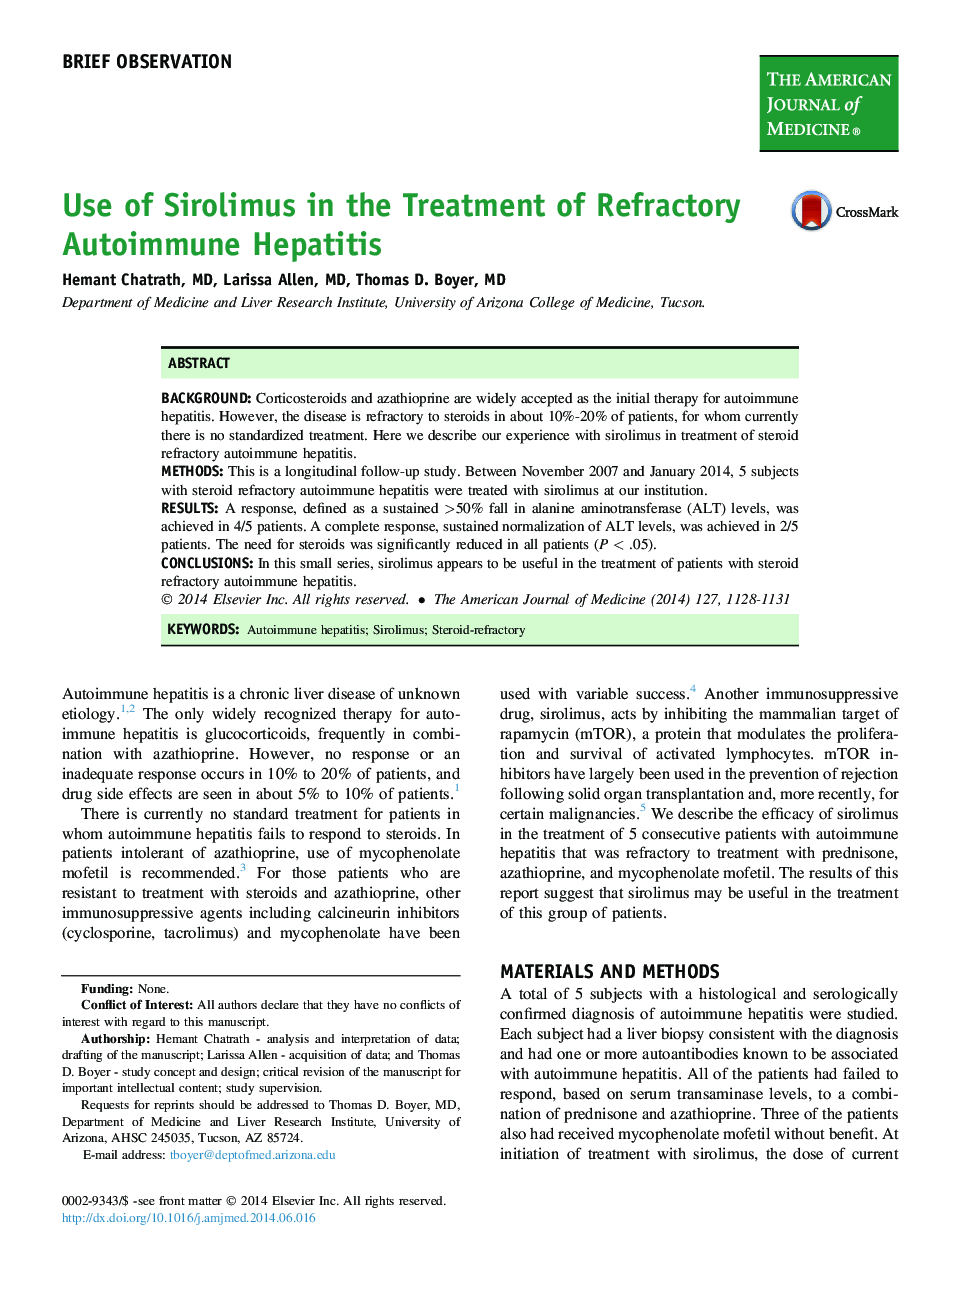 Use of Sirolimus in the Treatment of Refractory Autoimmune Hepatitis